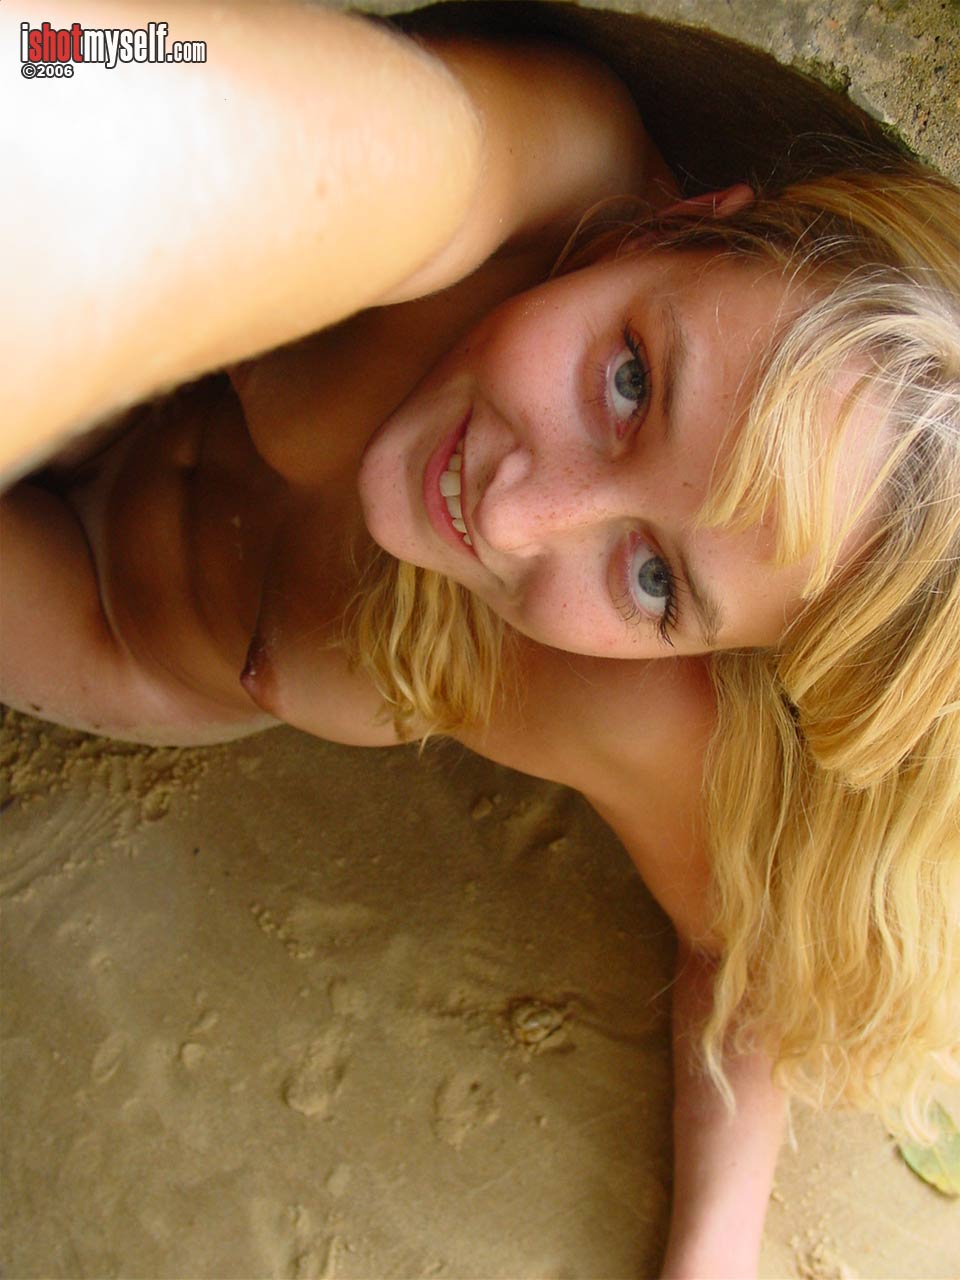 moonbeam-nude-blonde-amateur-teen-girl-beach-ishotmyself-07